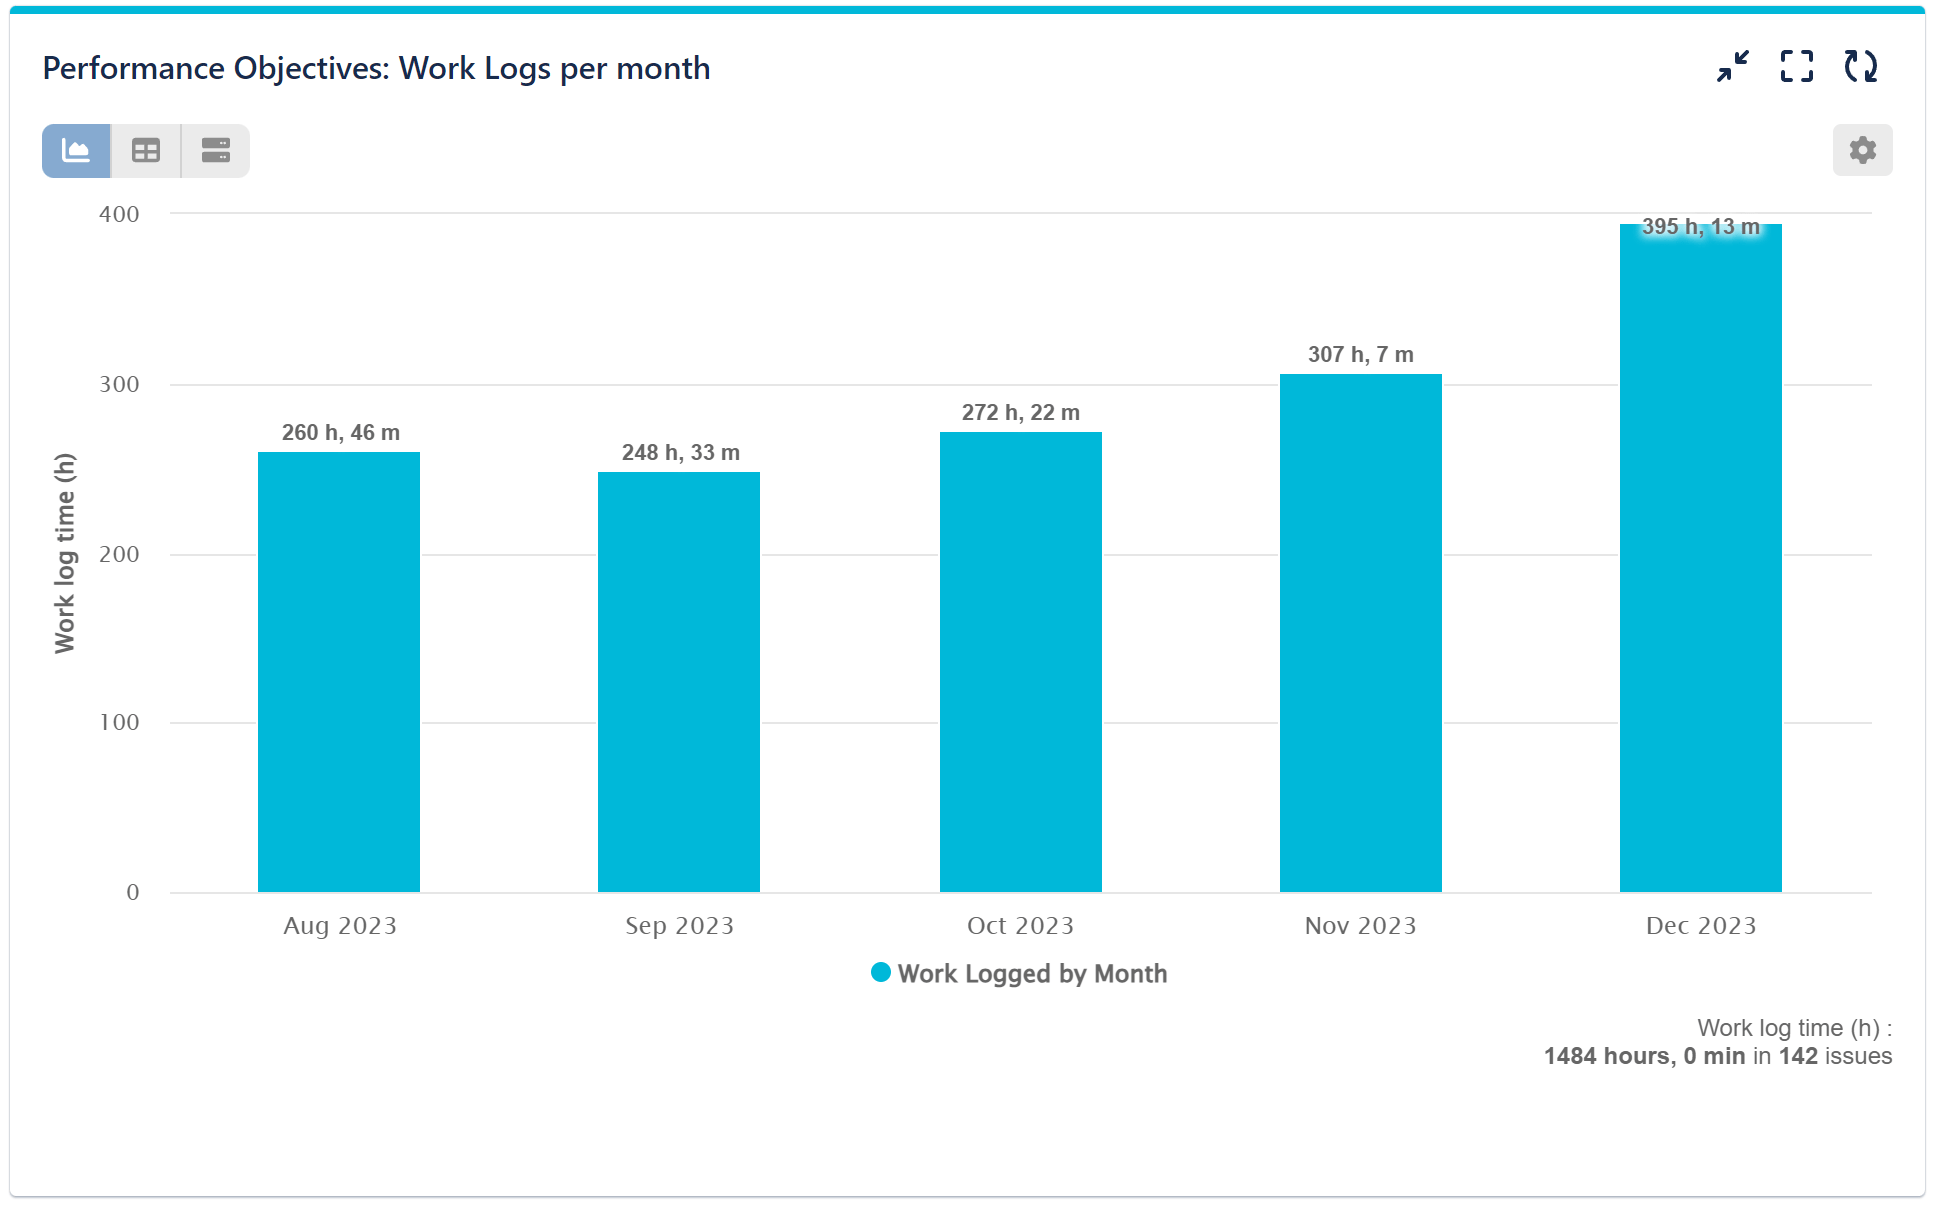 WorkLogged per Month Bar chart